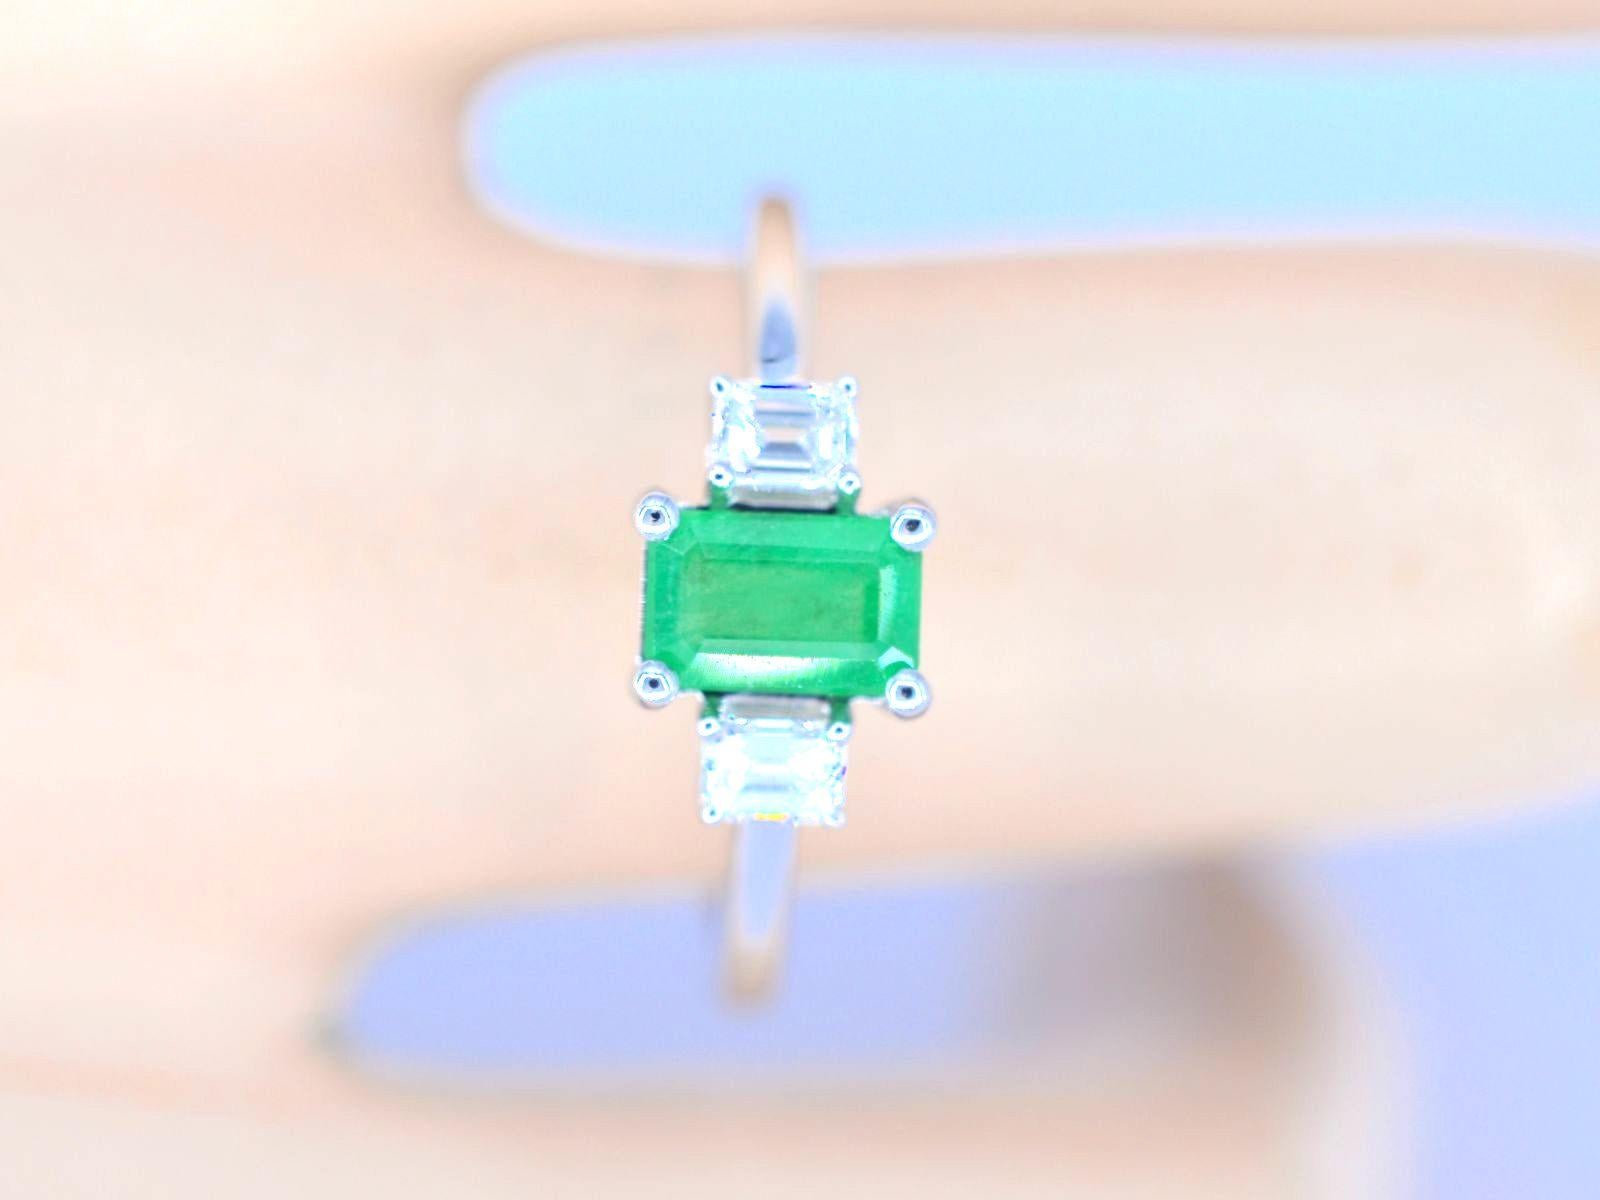 Diamonds: 2 pieces
Weight: 0.20 carat
Cut: Emerald
Colour: F-G
Clarity: SI
Quality: Very nice

Gemstone: Emerald
Cut: Emerald cut
Weight: 0.50 carat

Jewel: Ring
Weight: 1.5 gram
Hallmark: 14 karat 
Ring Size: 54 (17.25 mm)
Condition: New

Retail